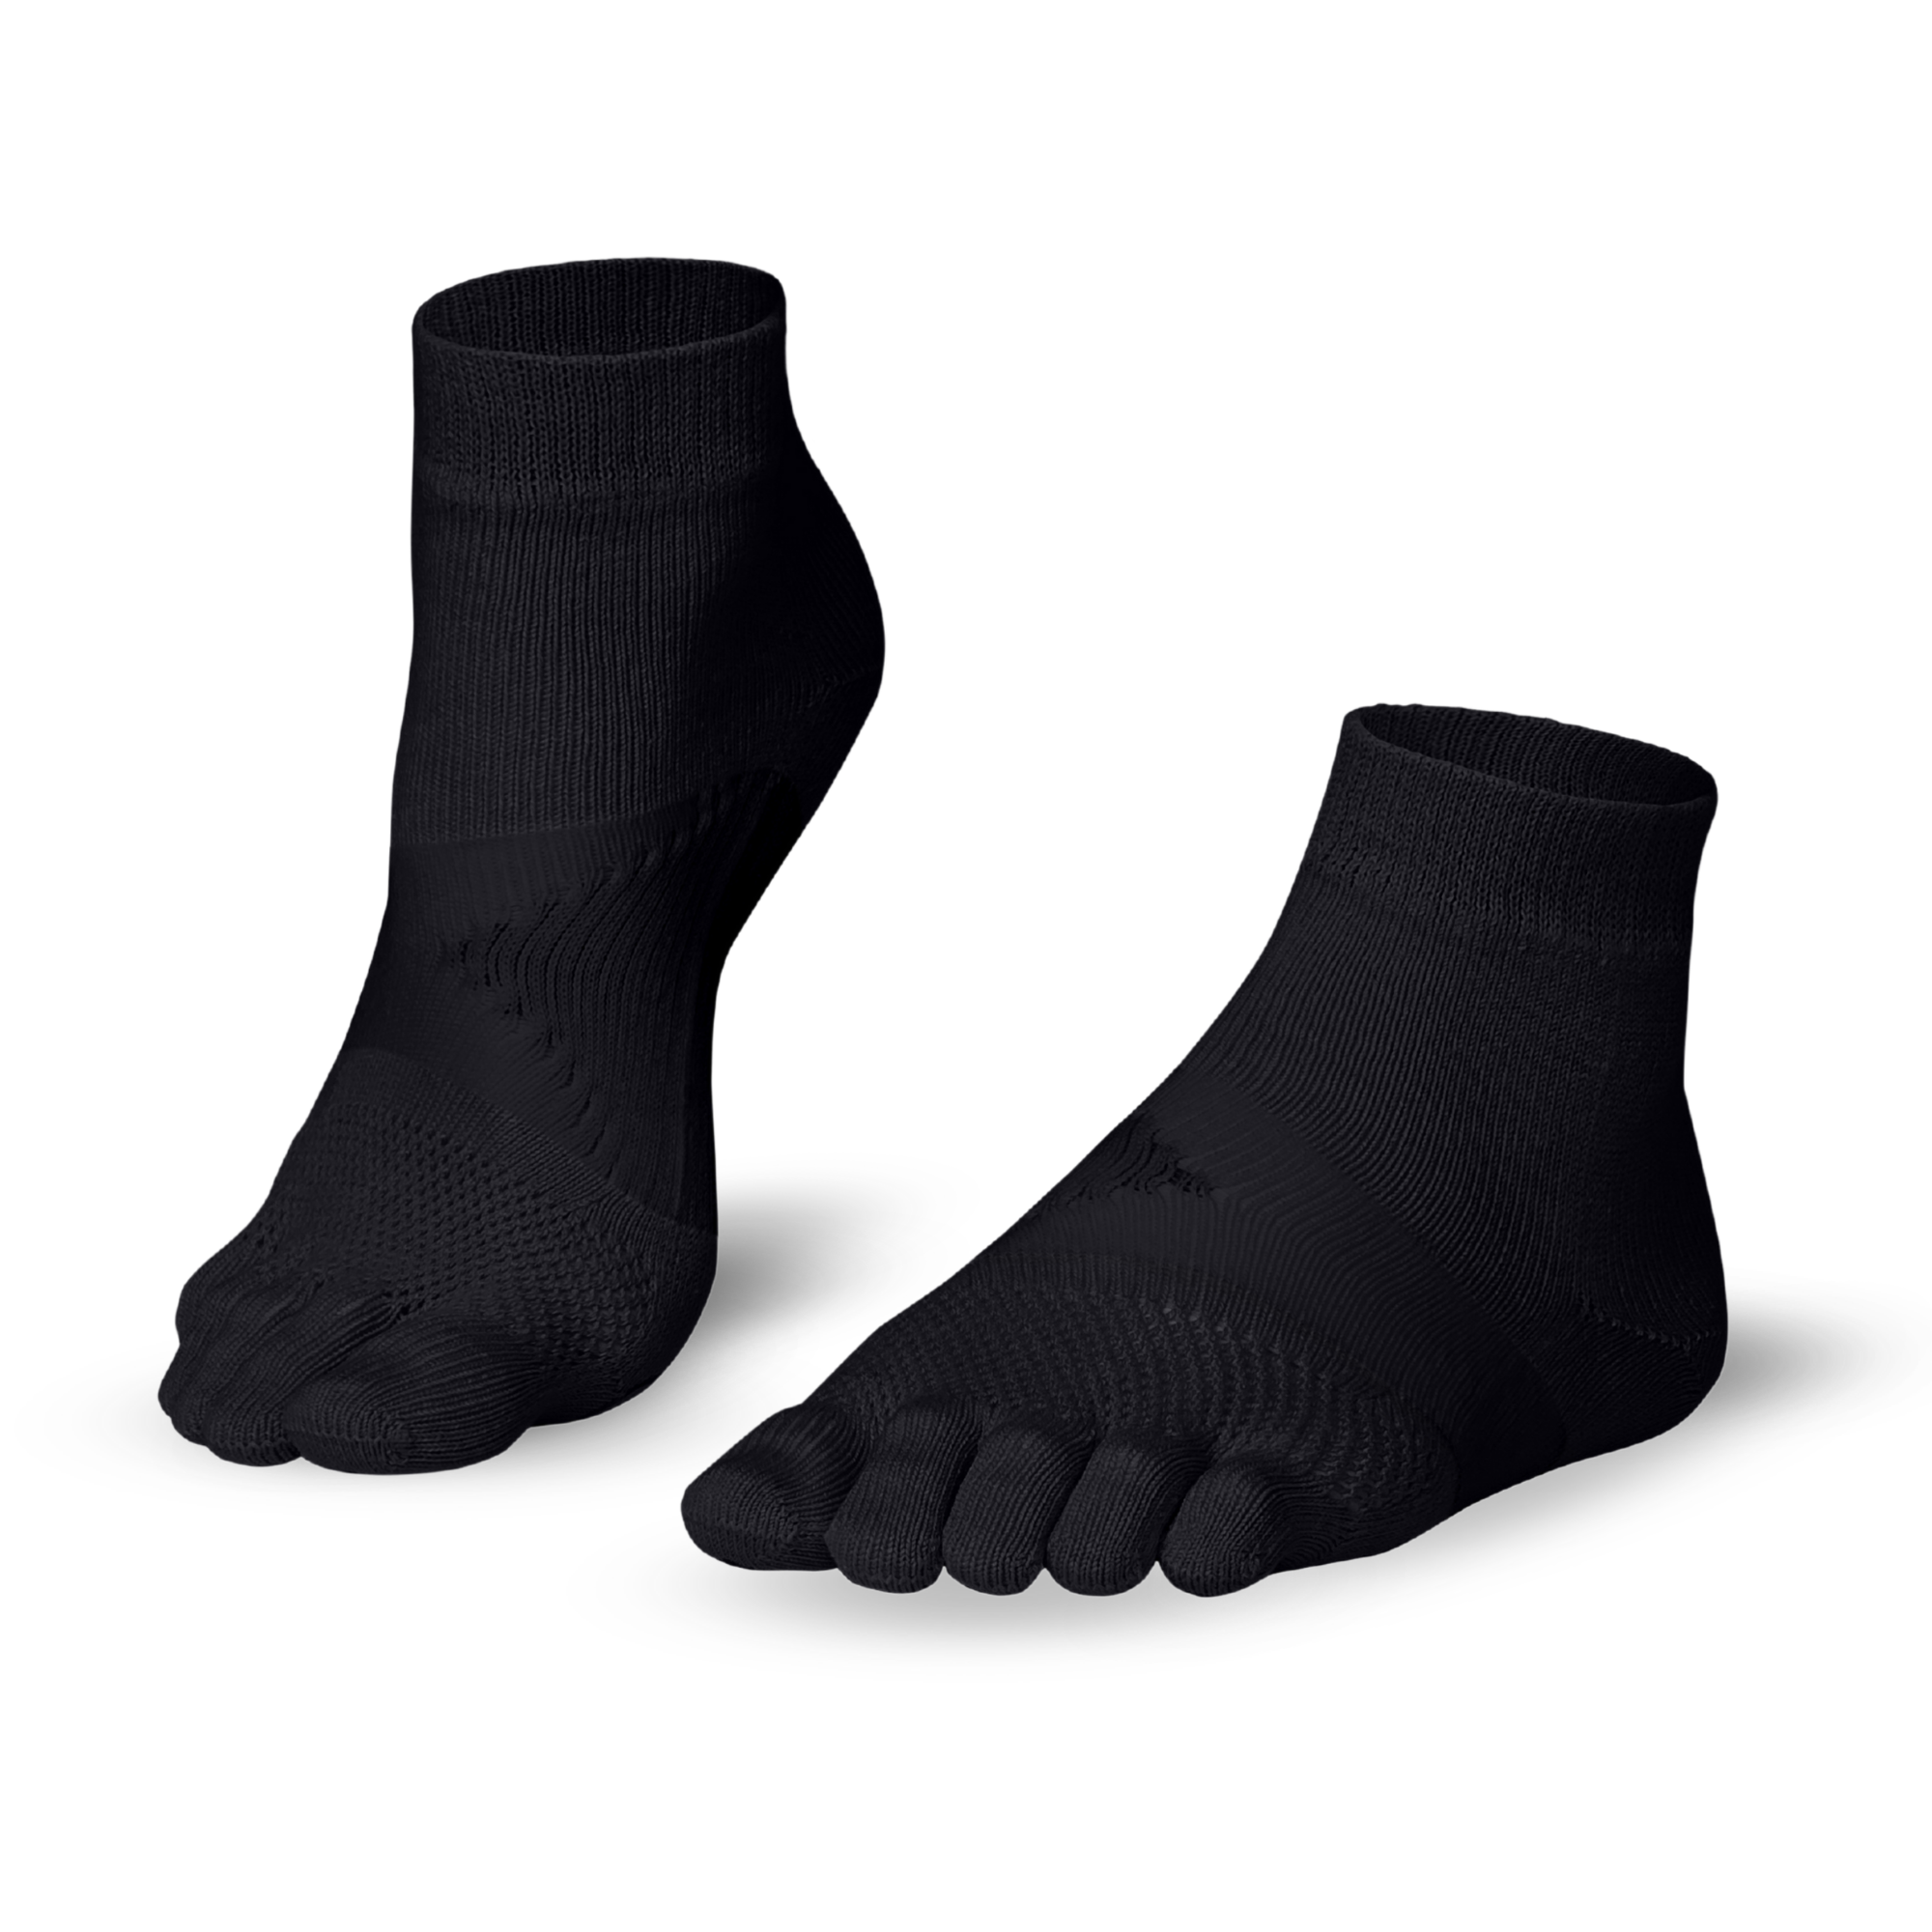 Calcetines de running TS - los calcetines de running imprescindibles de Knitido : negro